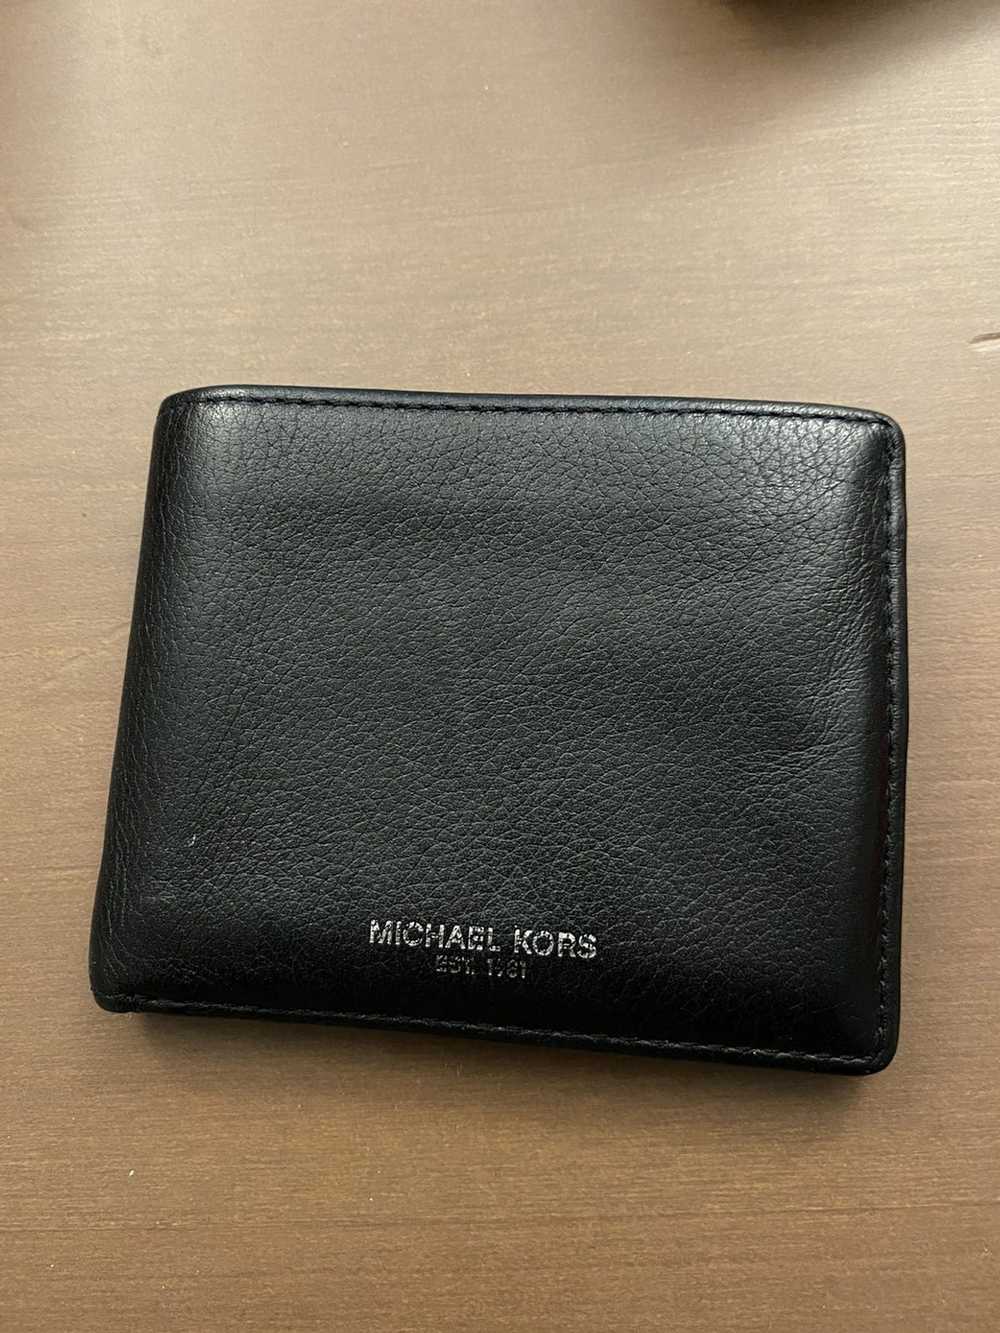 Michael Kors Michael Kors Wallet - image 1